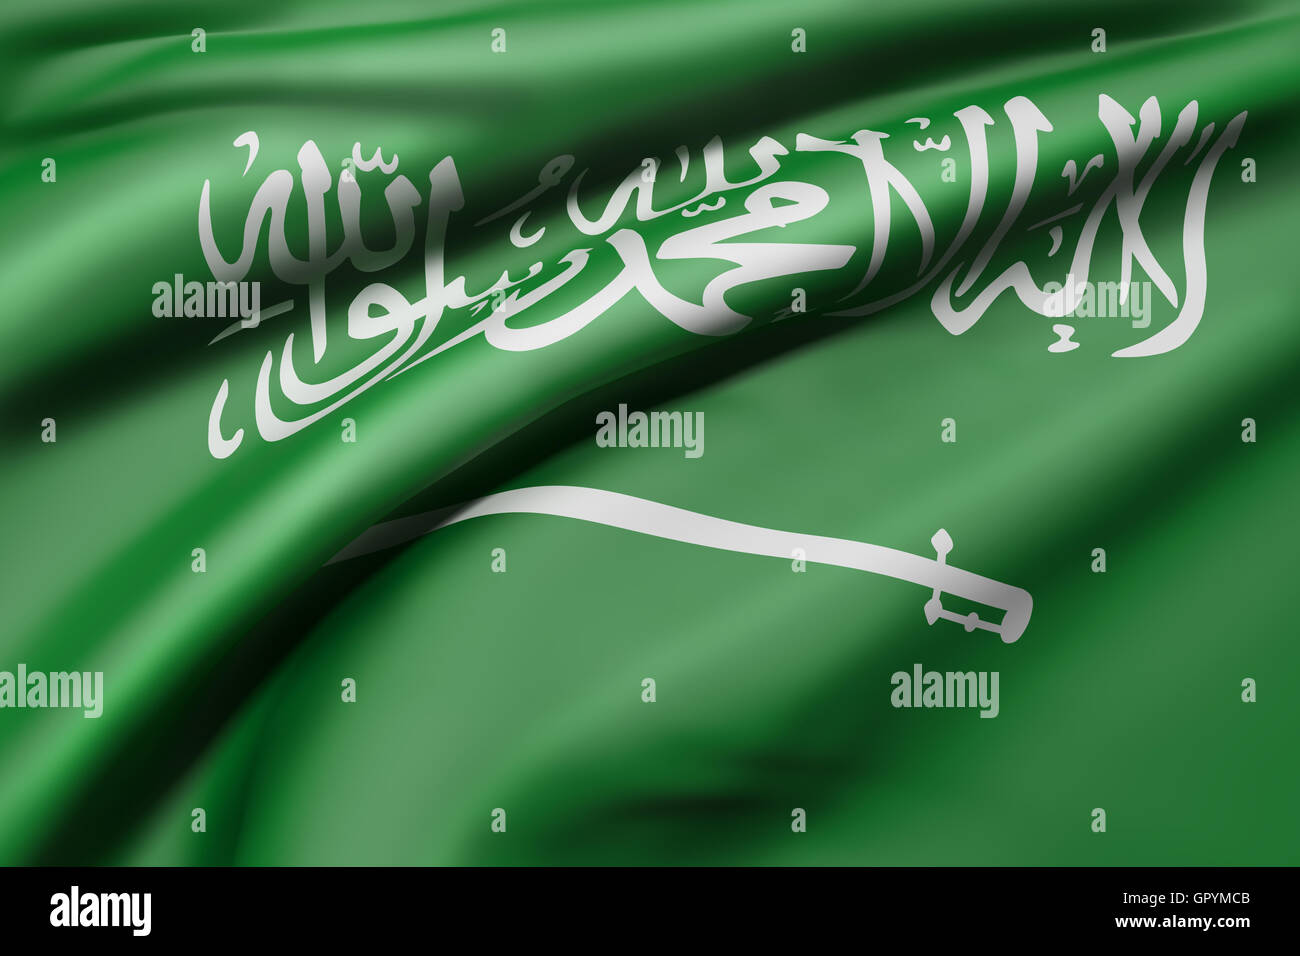 3d rendering of Kingdom of Saudi Arabia flag waving Stock Photo